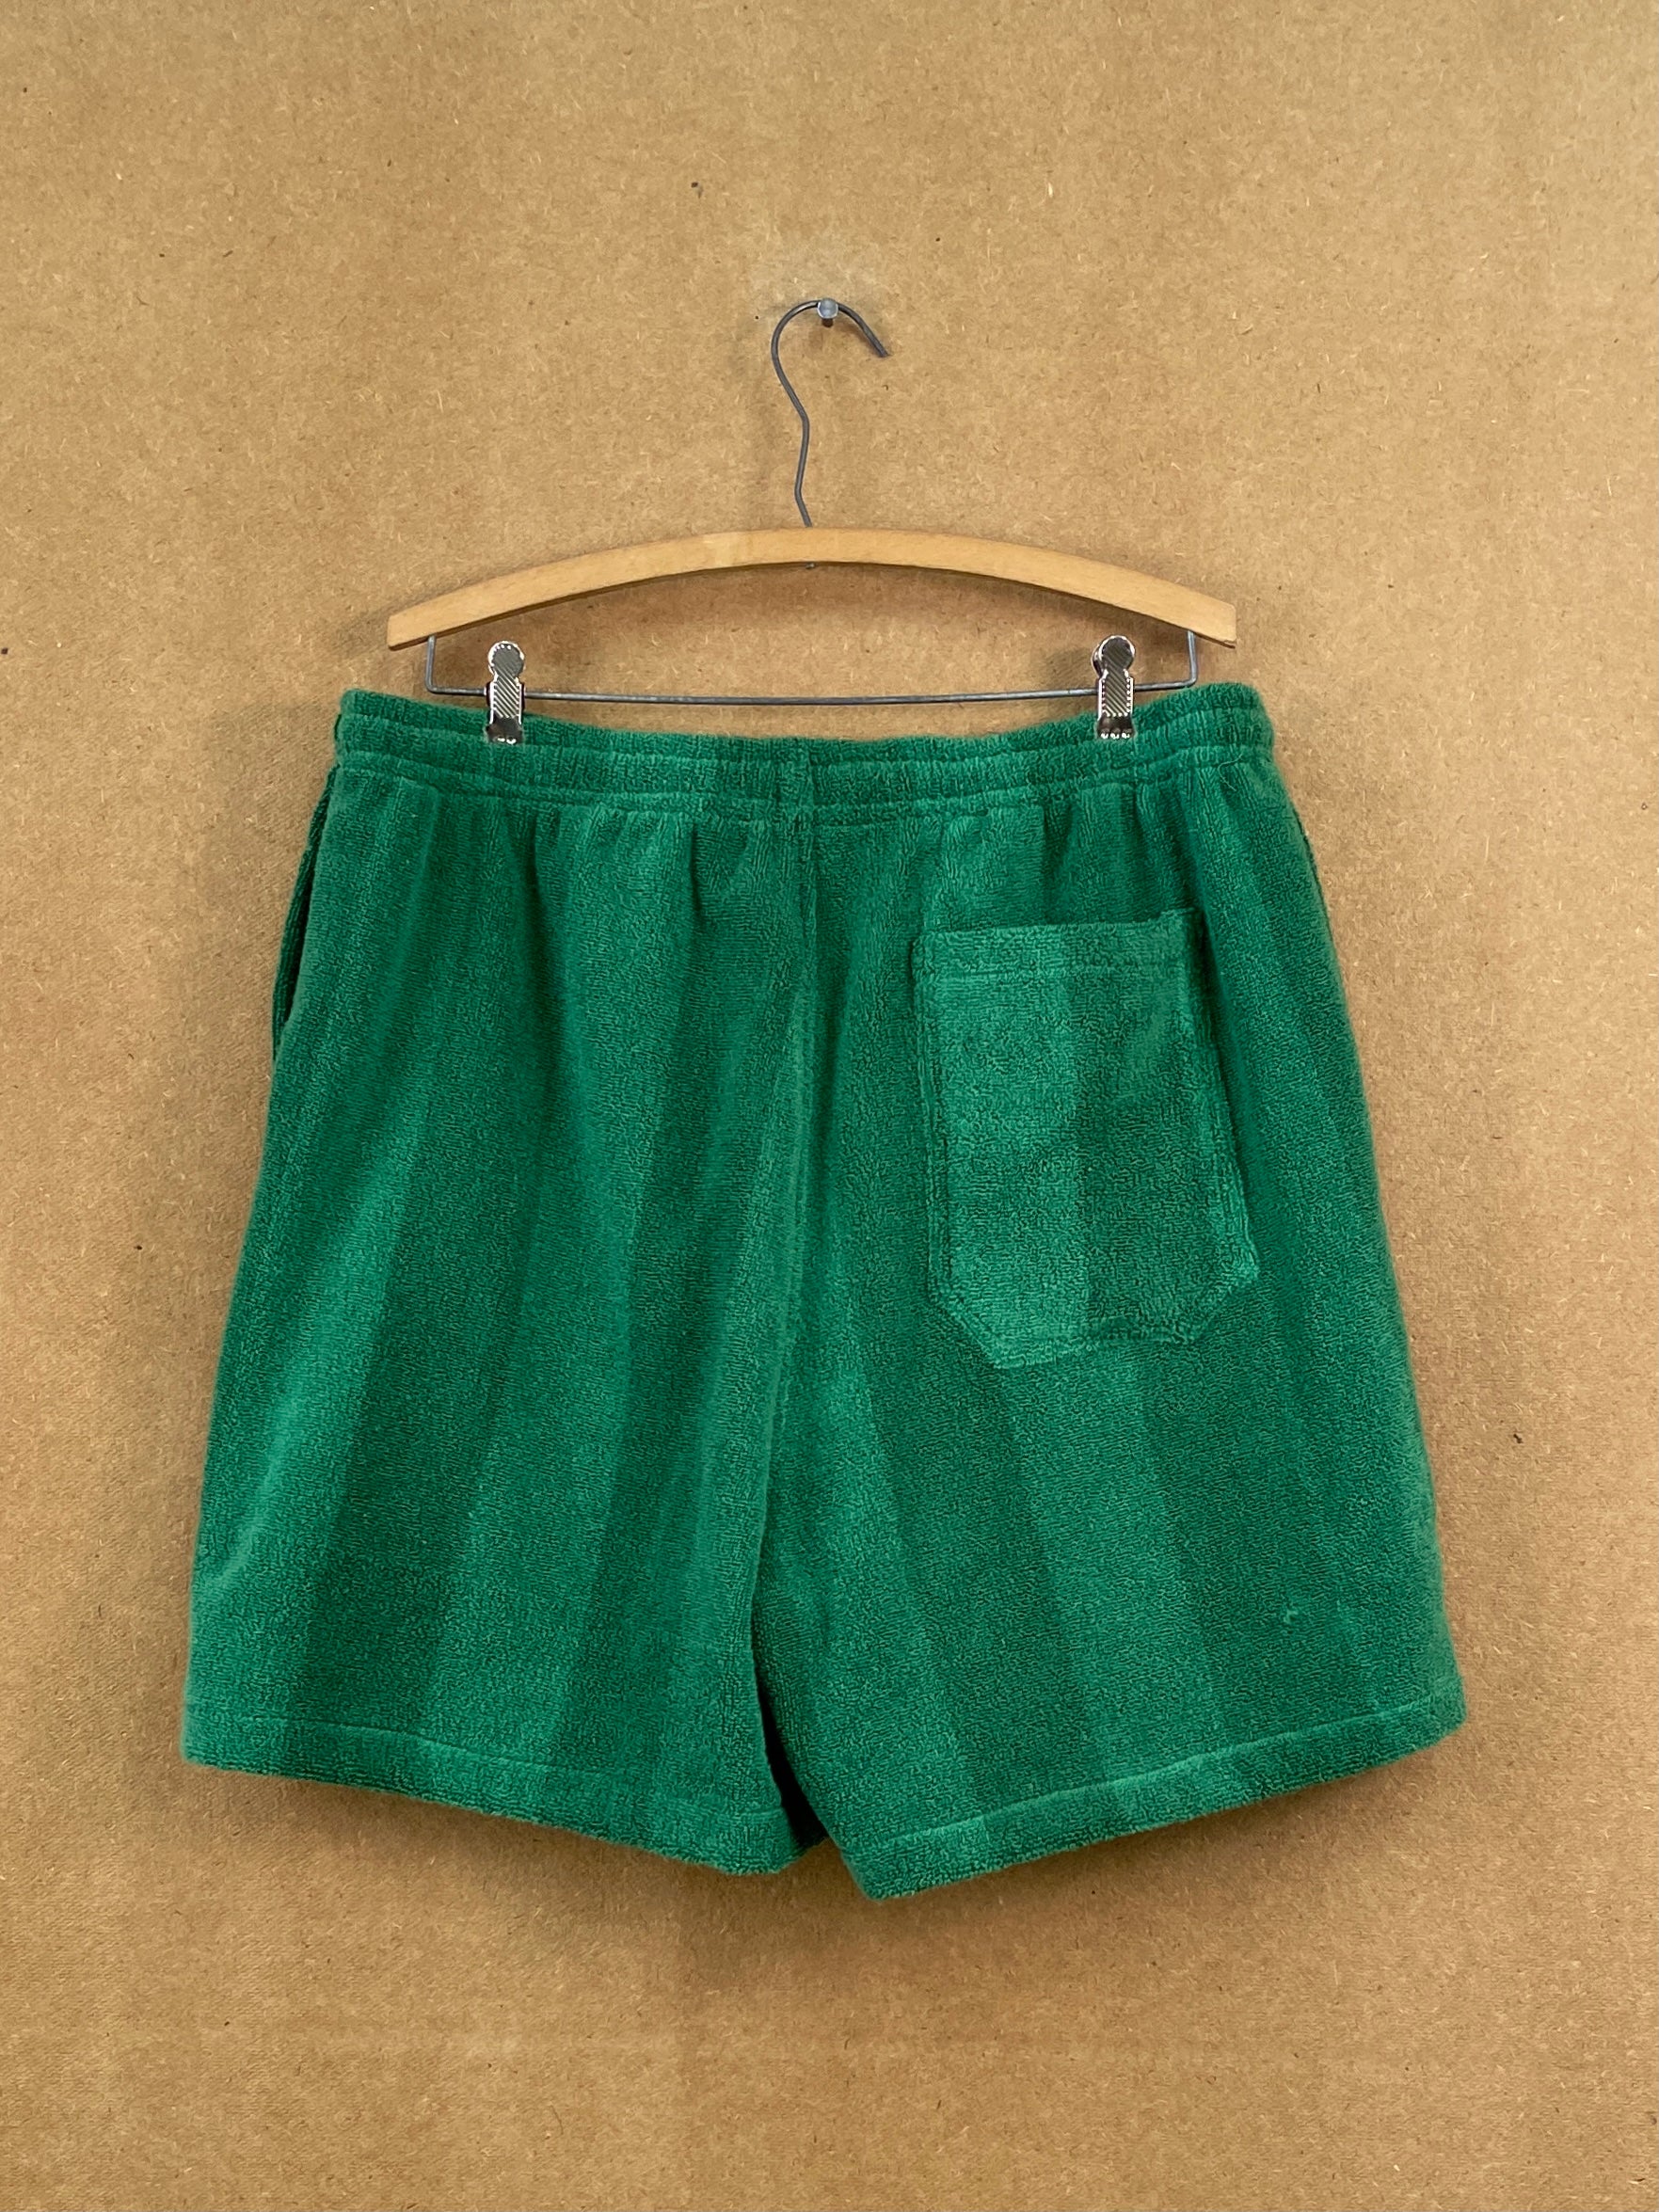 Jade Stripe Towel Rugby Shorts - L/XL